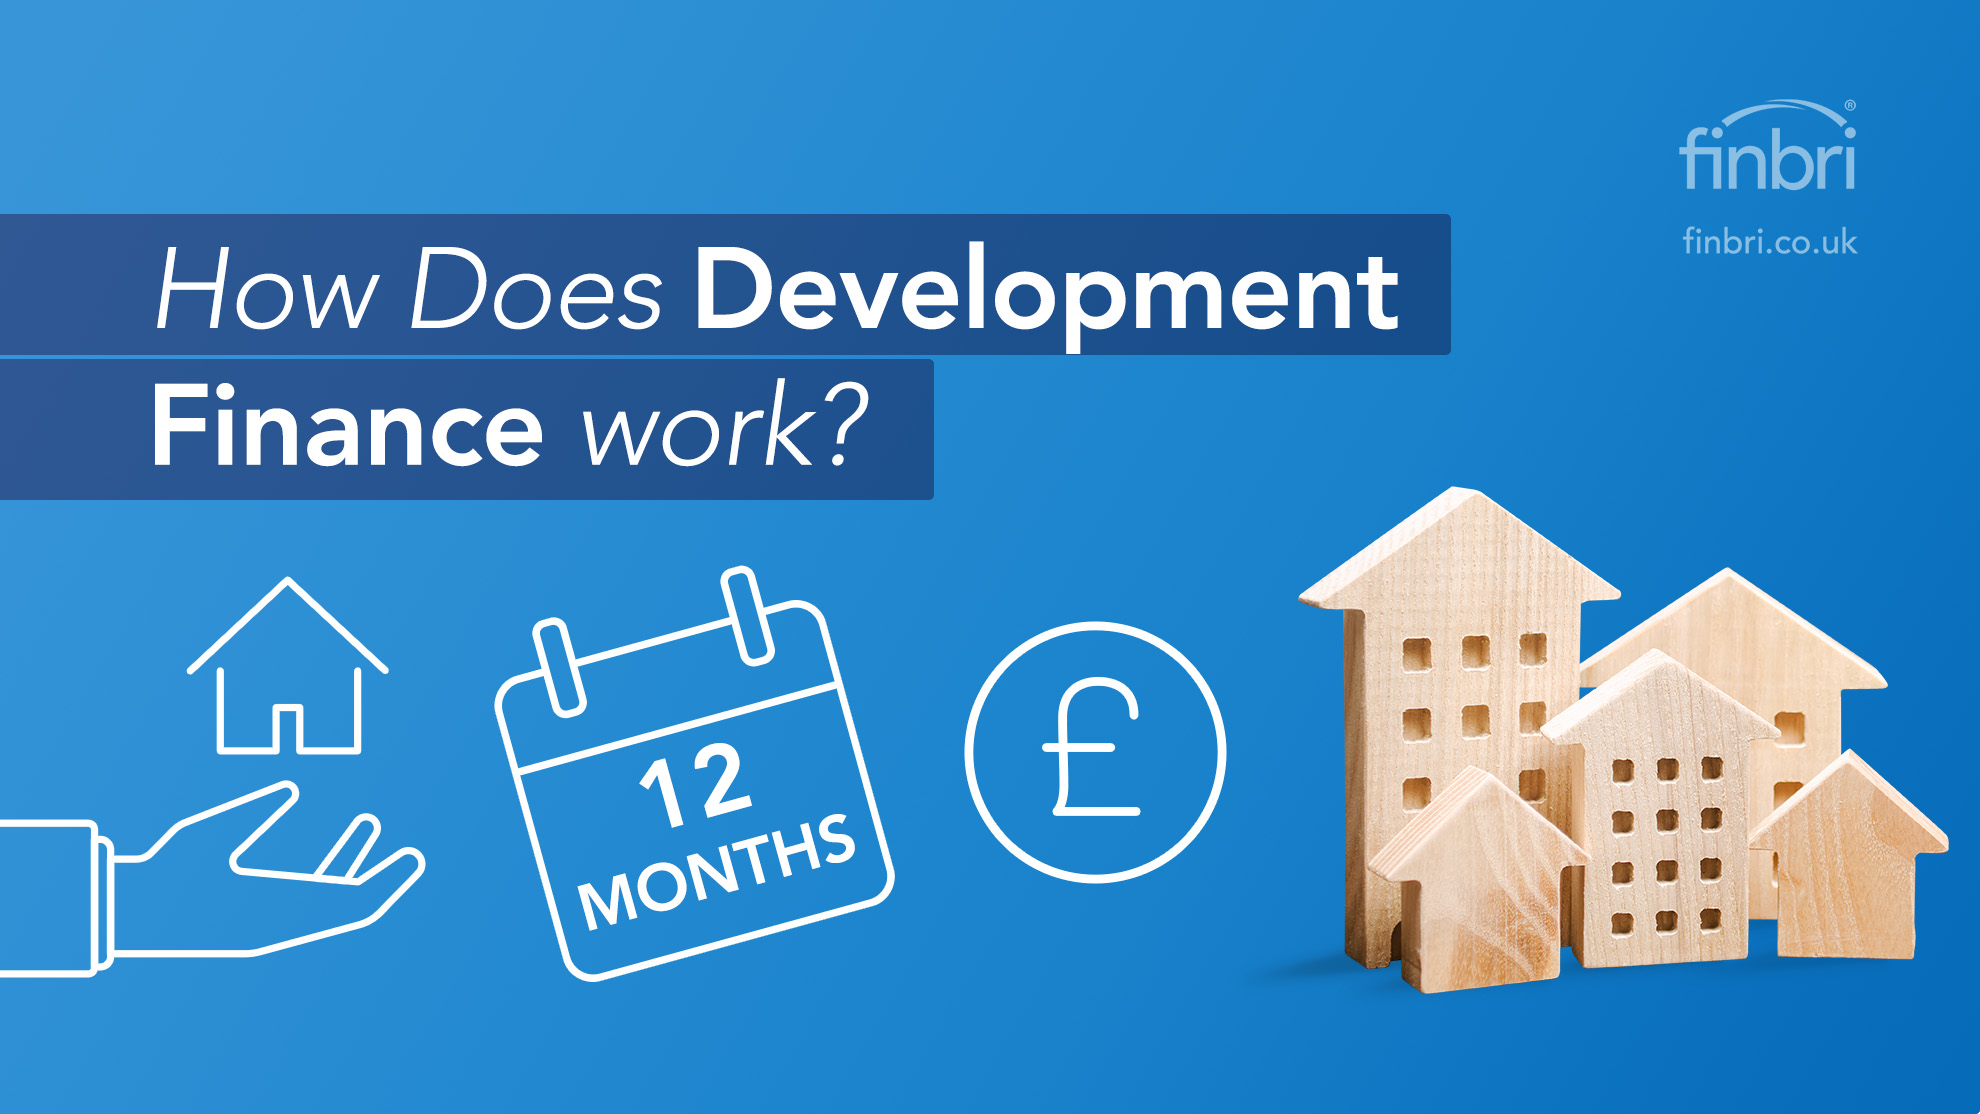 How does Development Finance work?